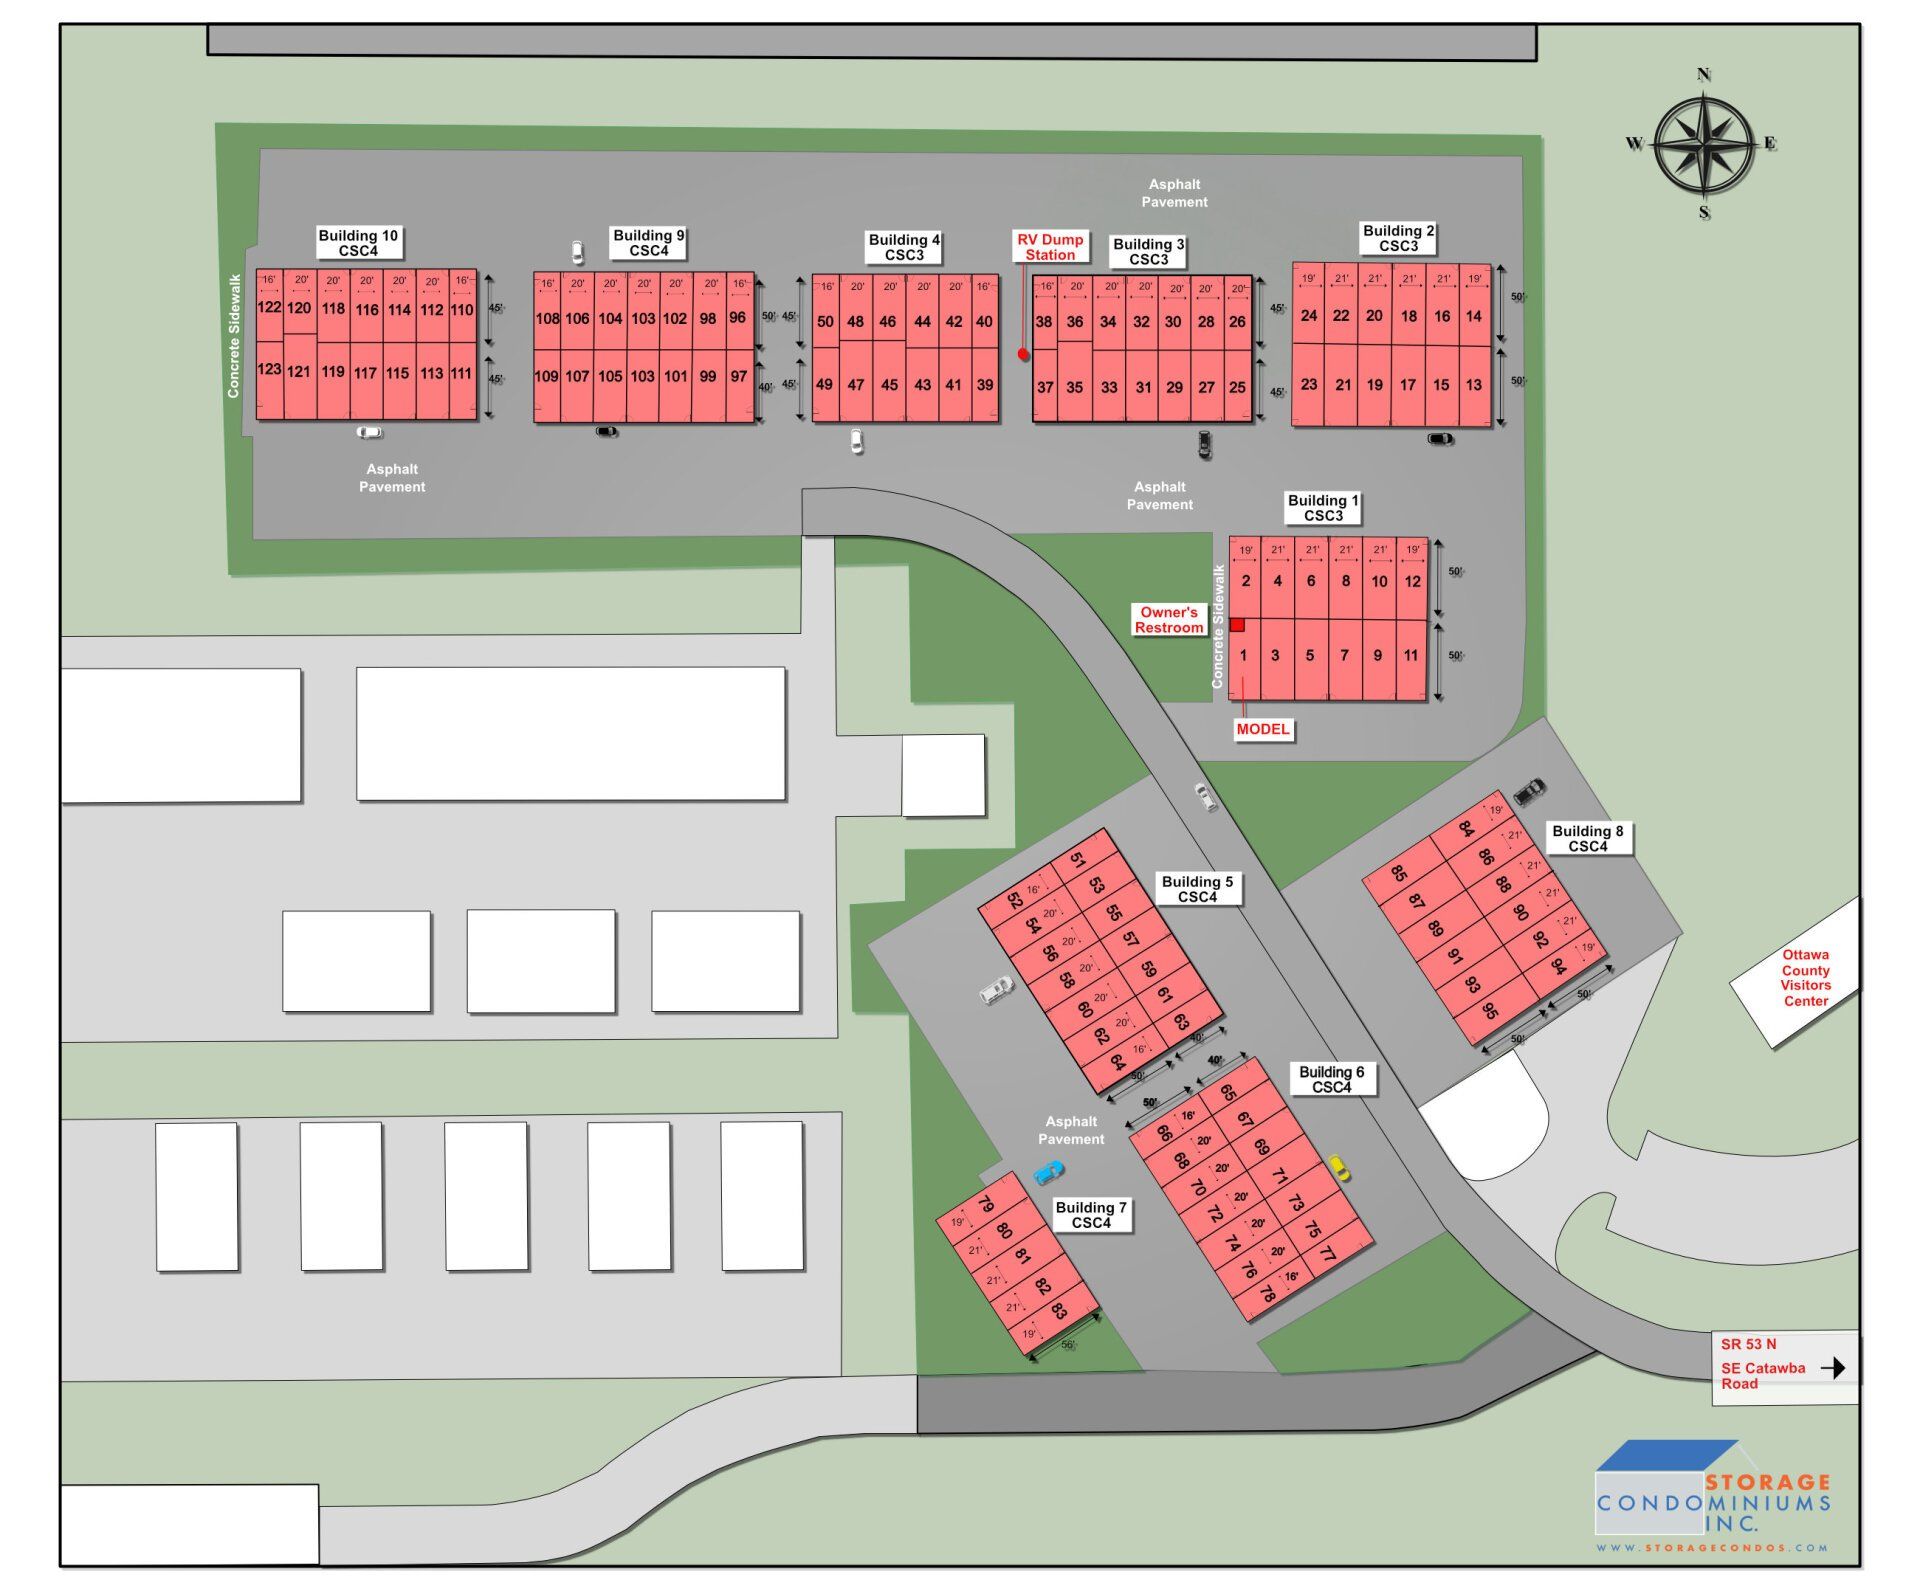 Storage Condos Site Plan - Port Clinton, Ohio